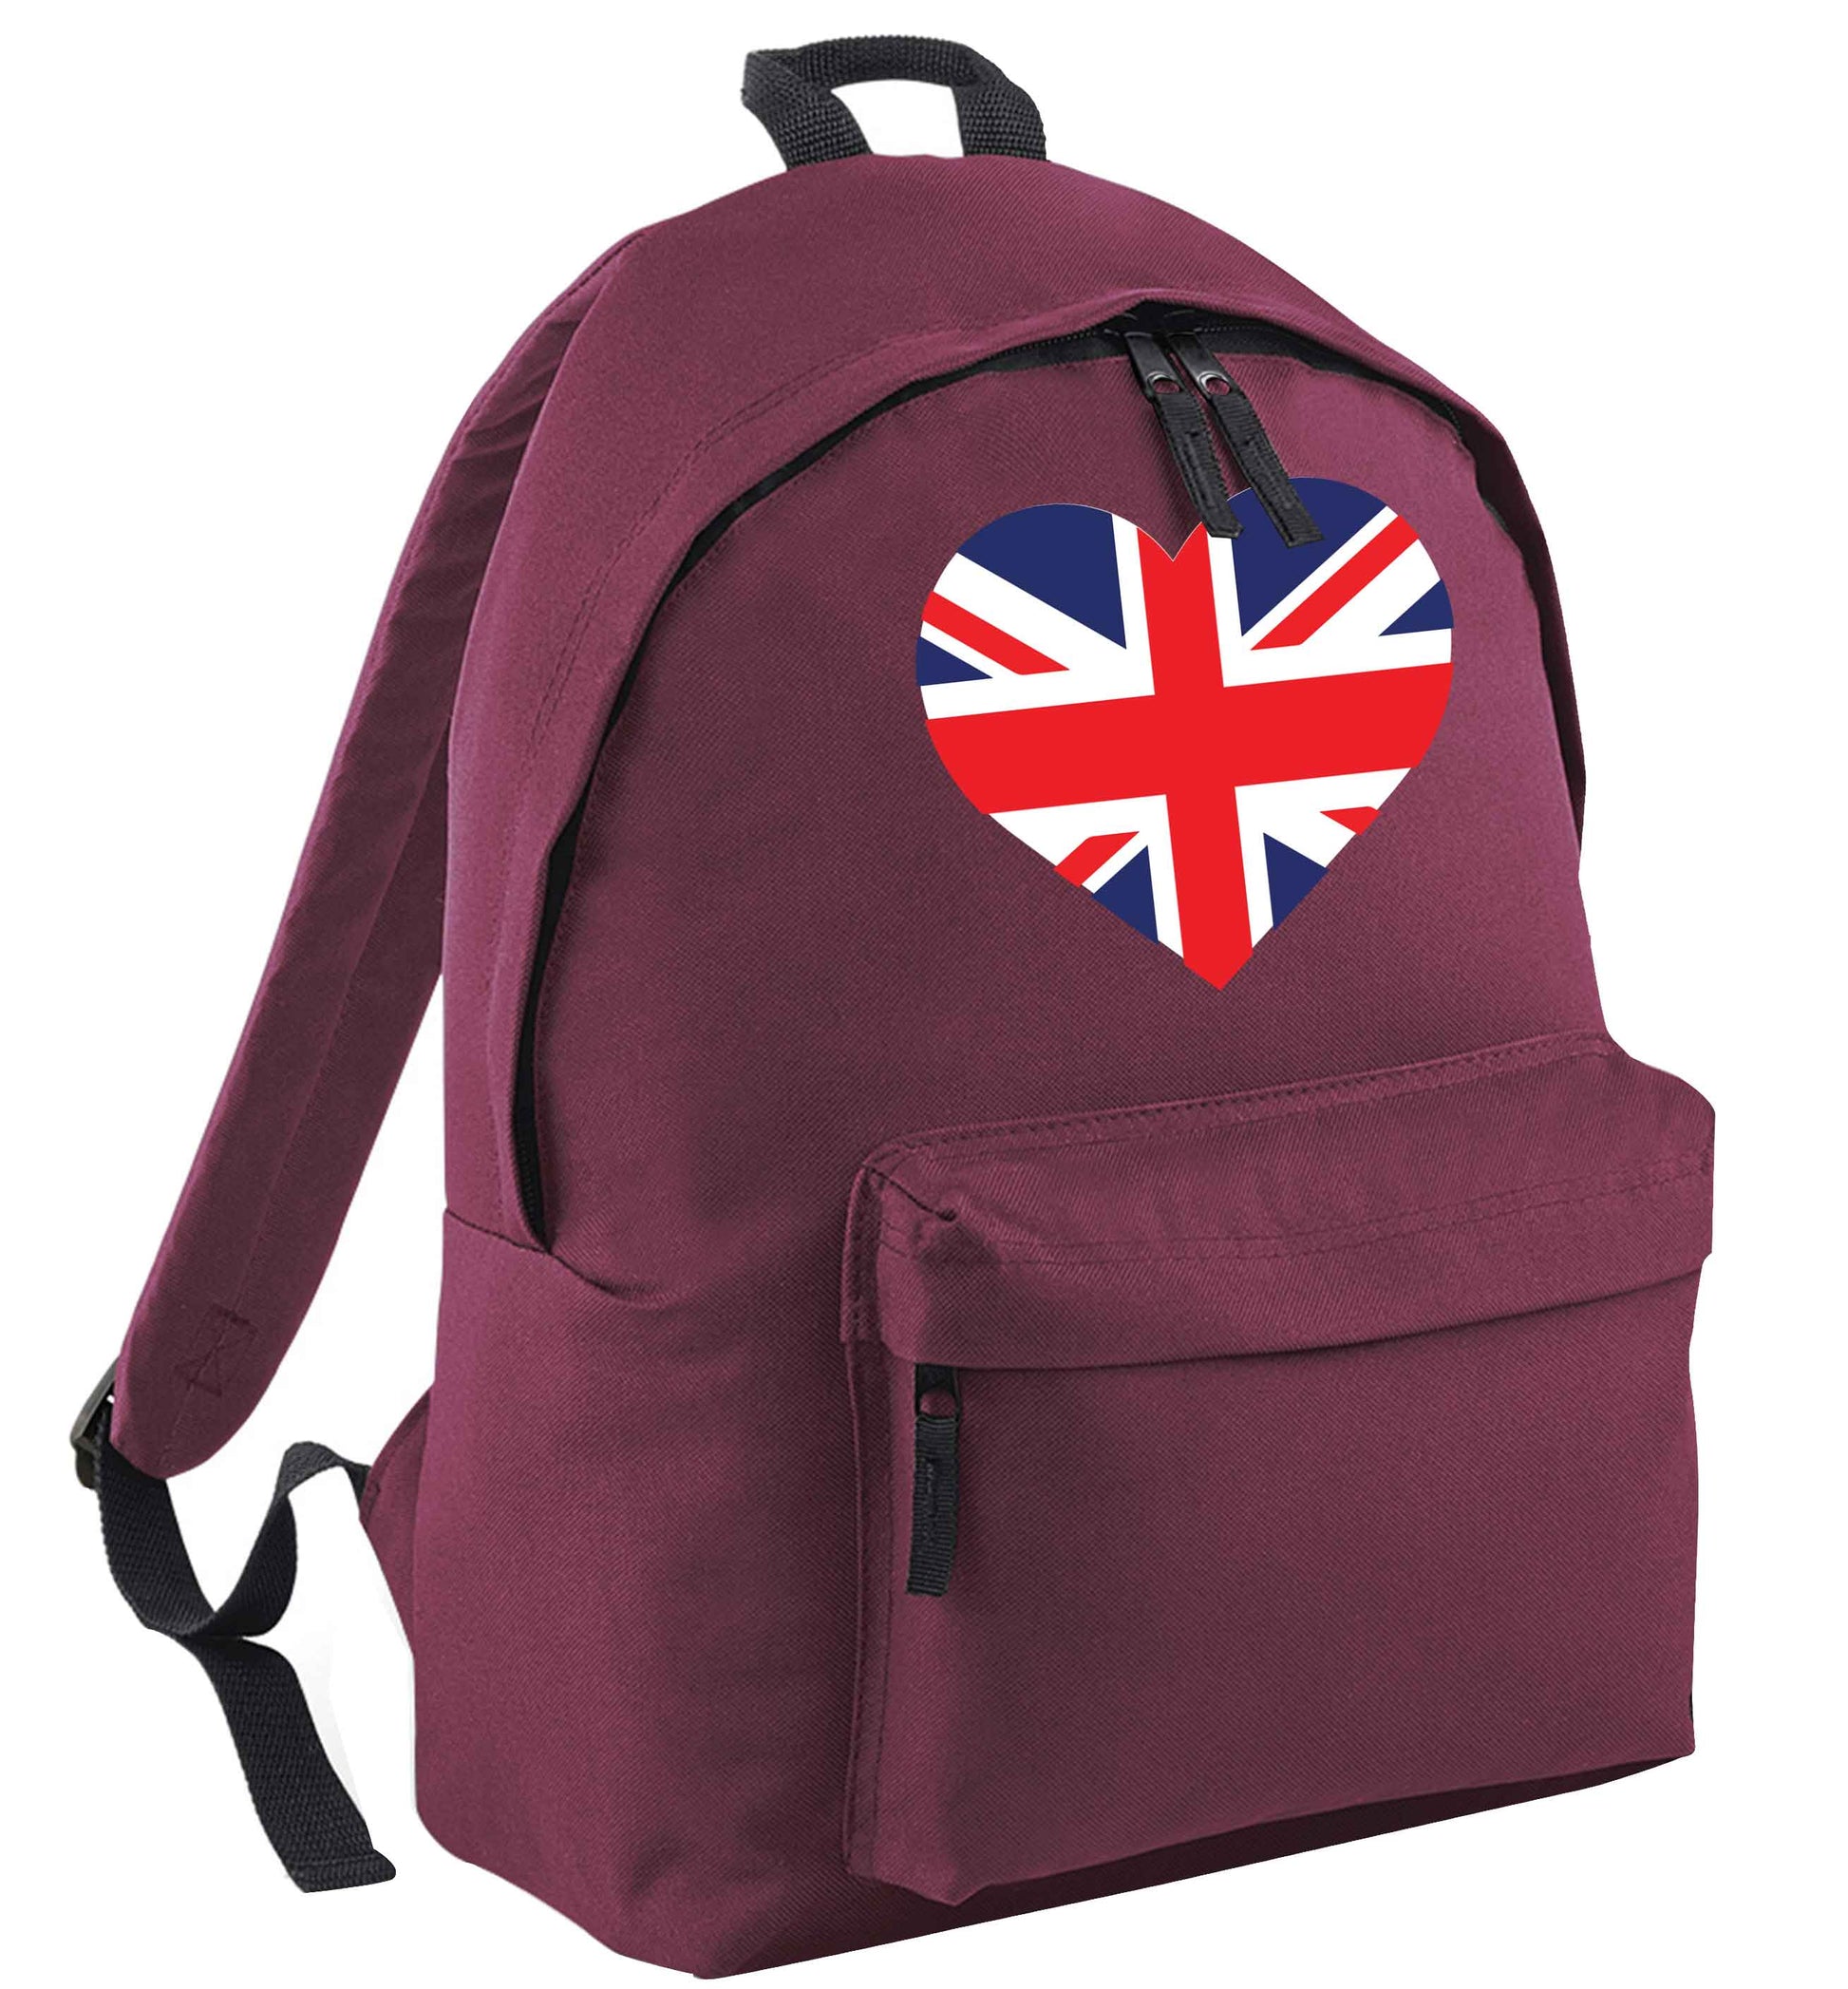 Union Jack Heart maroon adults backpack